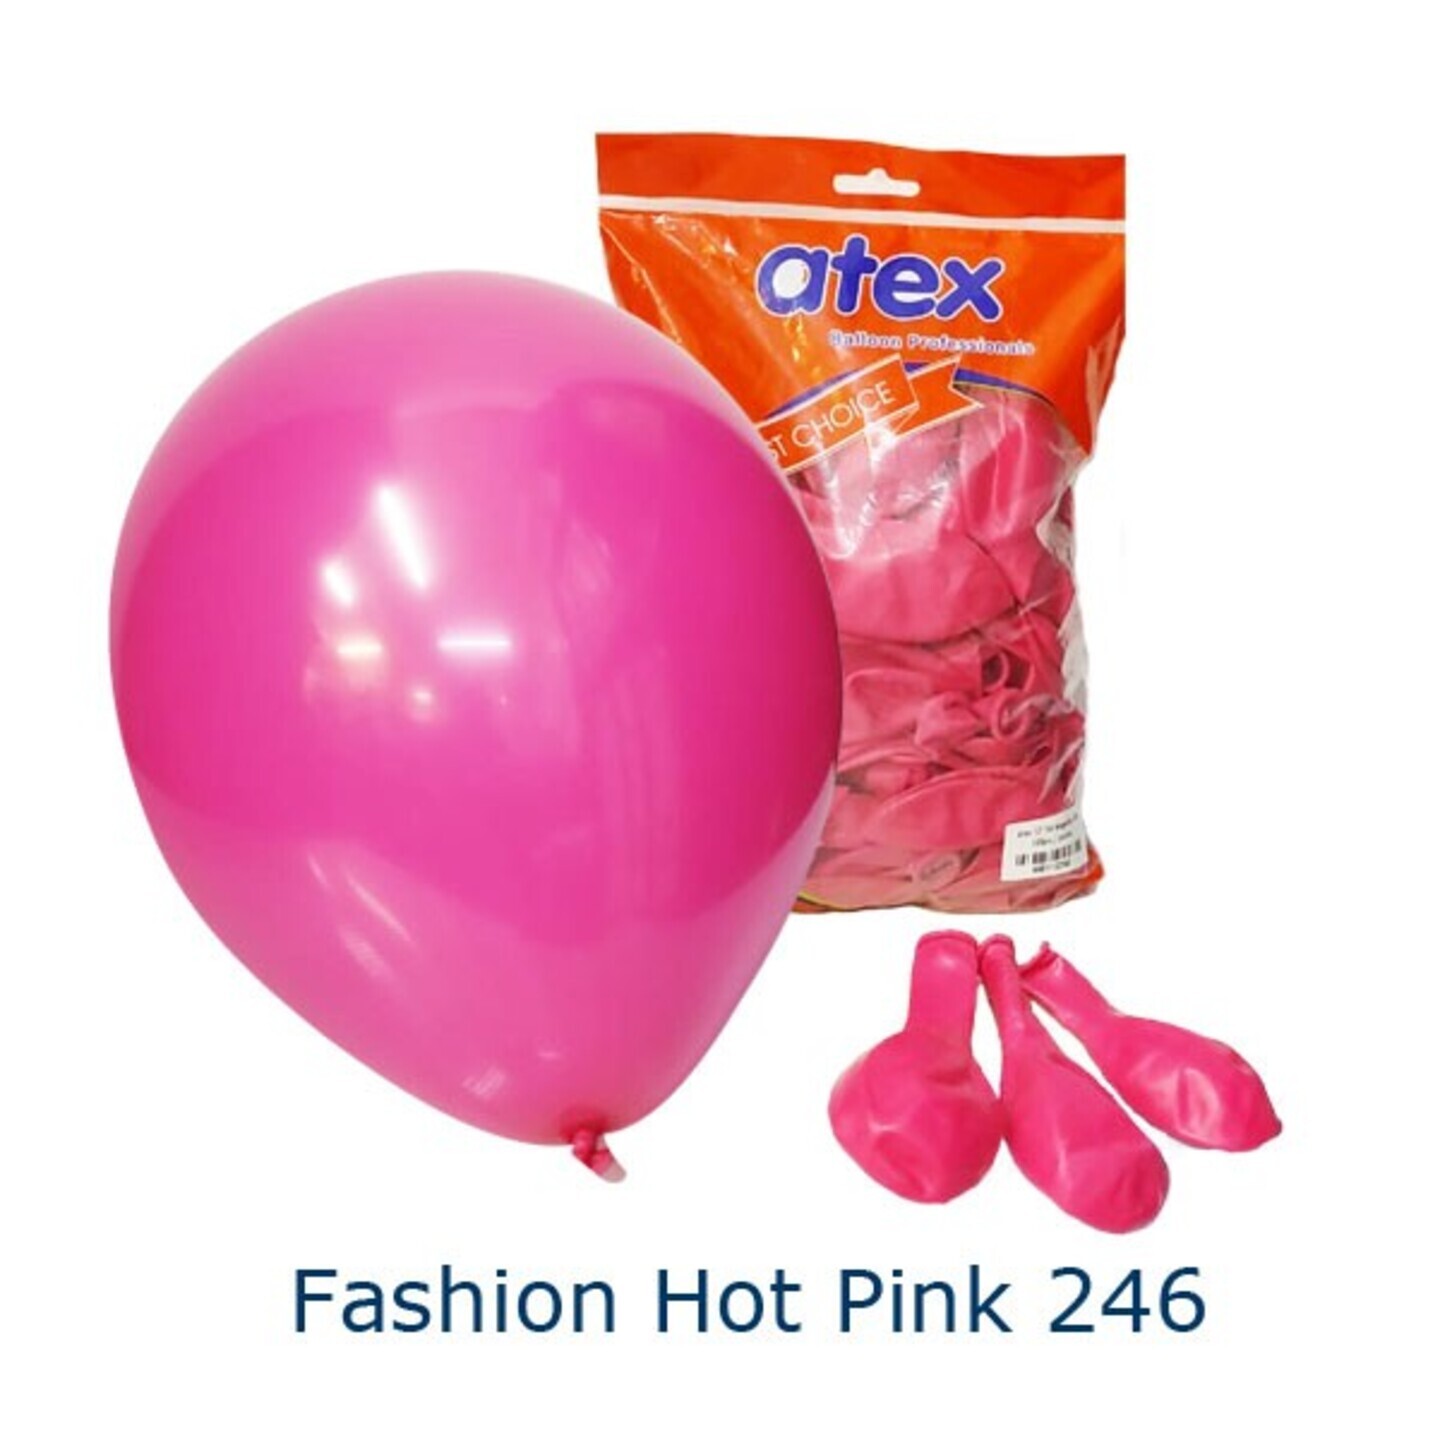 Fashion Hot Pink 246